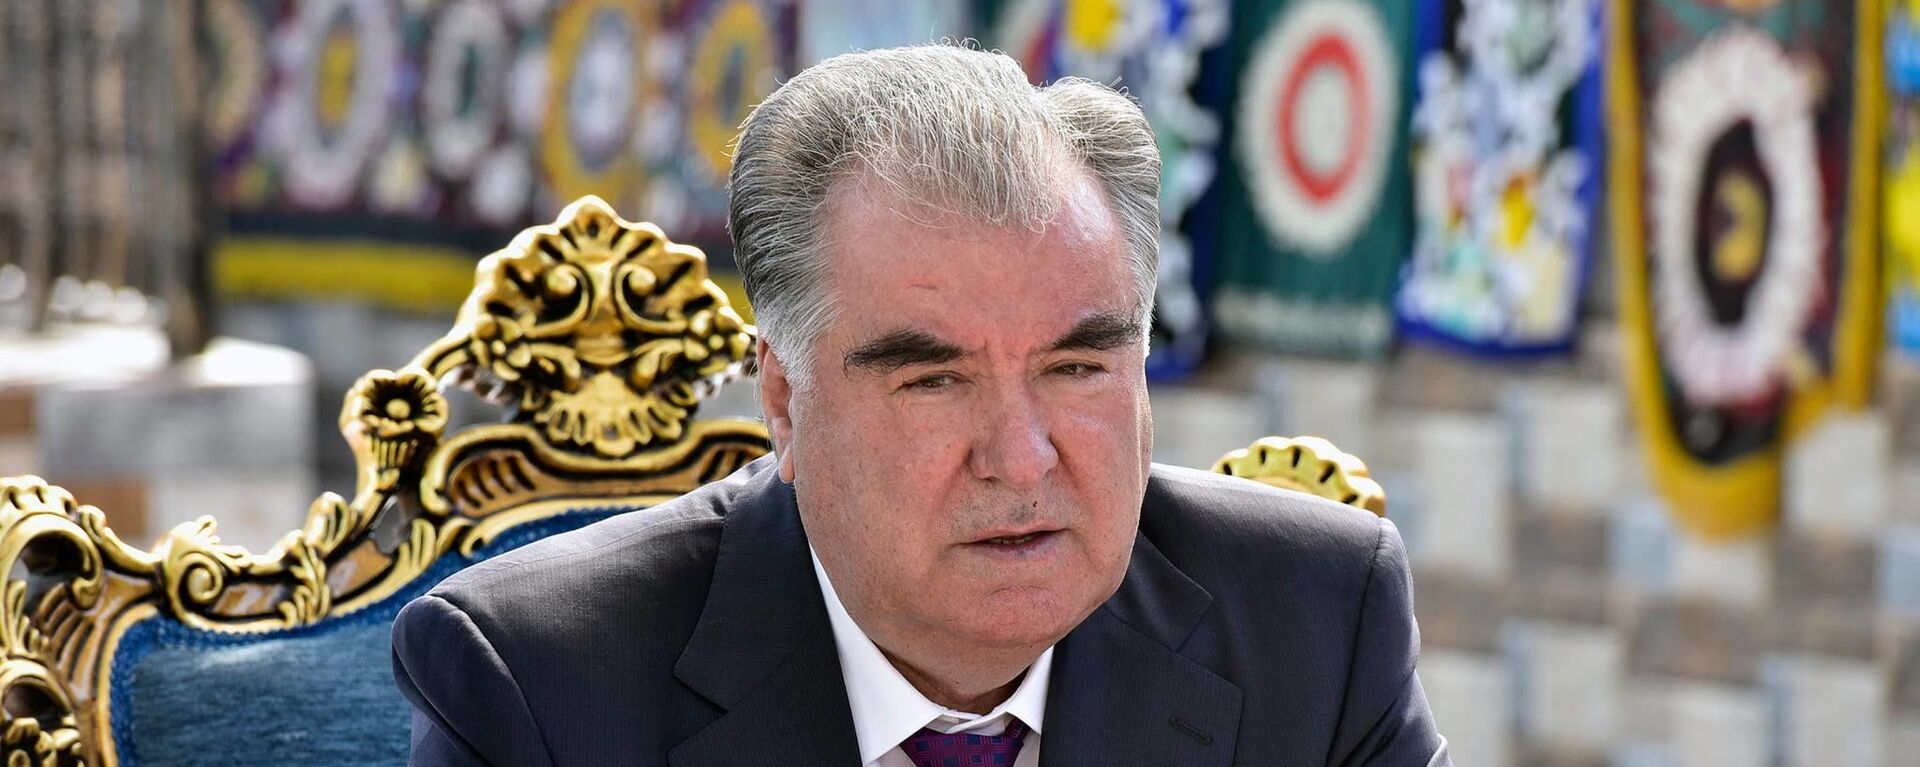 Президент Республики Таджикистан Эмомали Рахмон - Sputnik Тоҷикистон, 1920, 25.03.2021